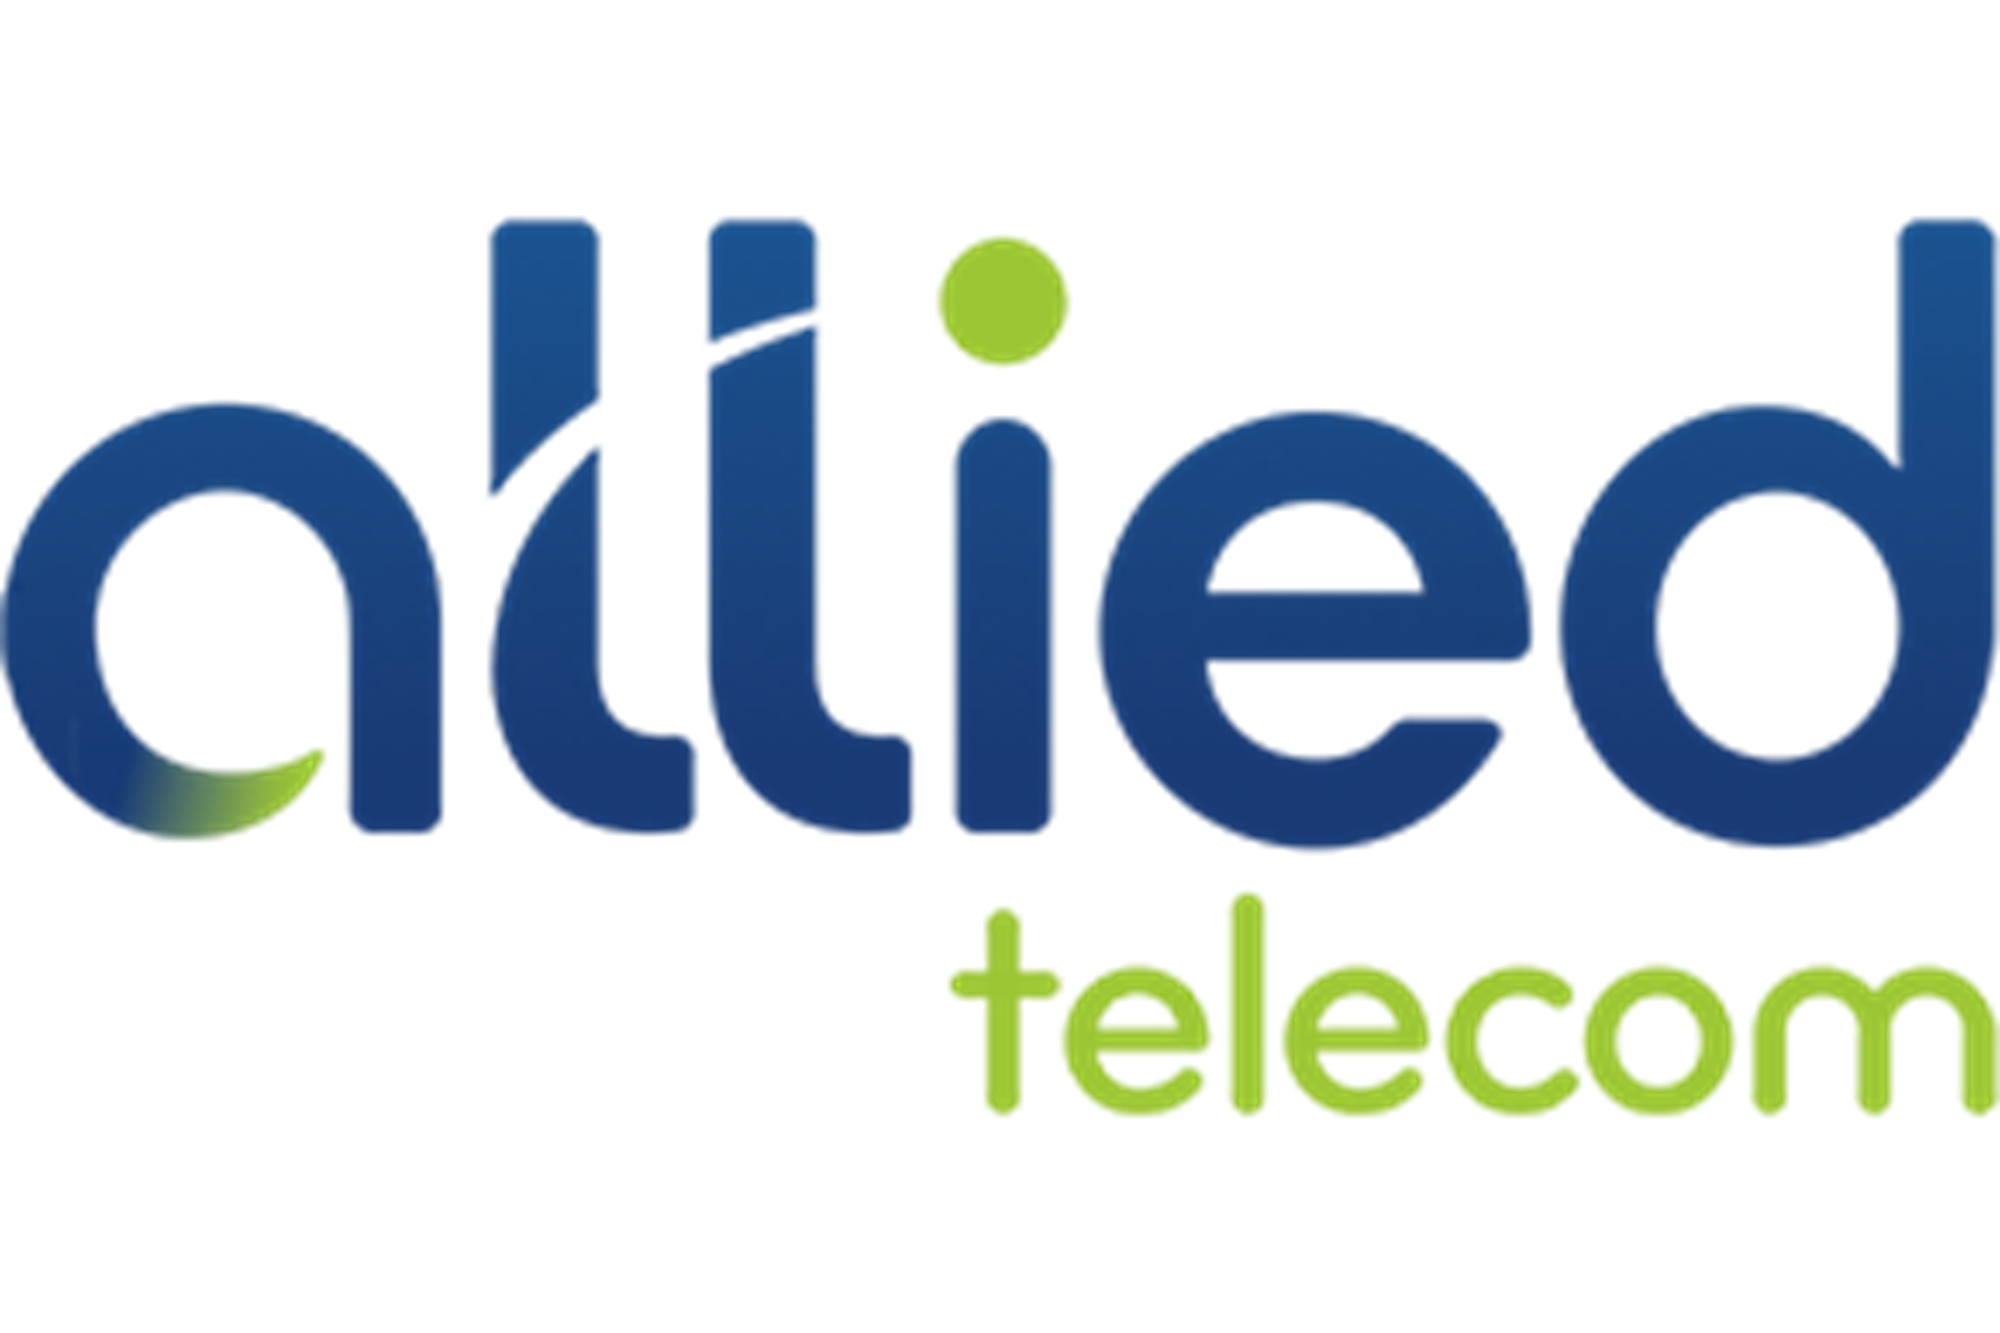 avant-Allied-Telecom-logo.png